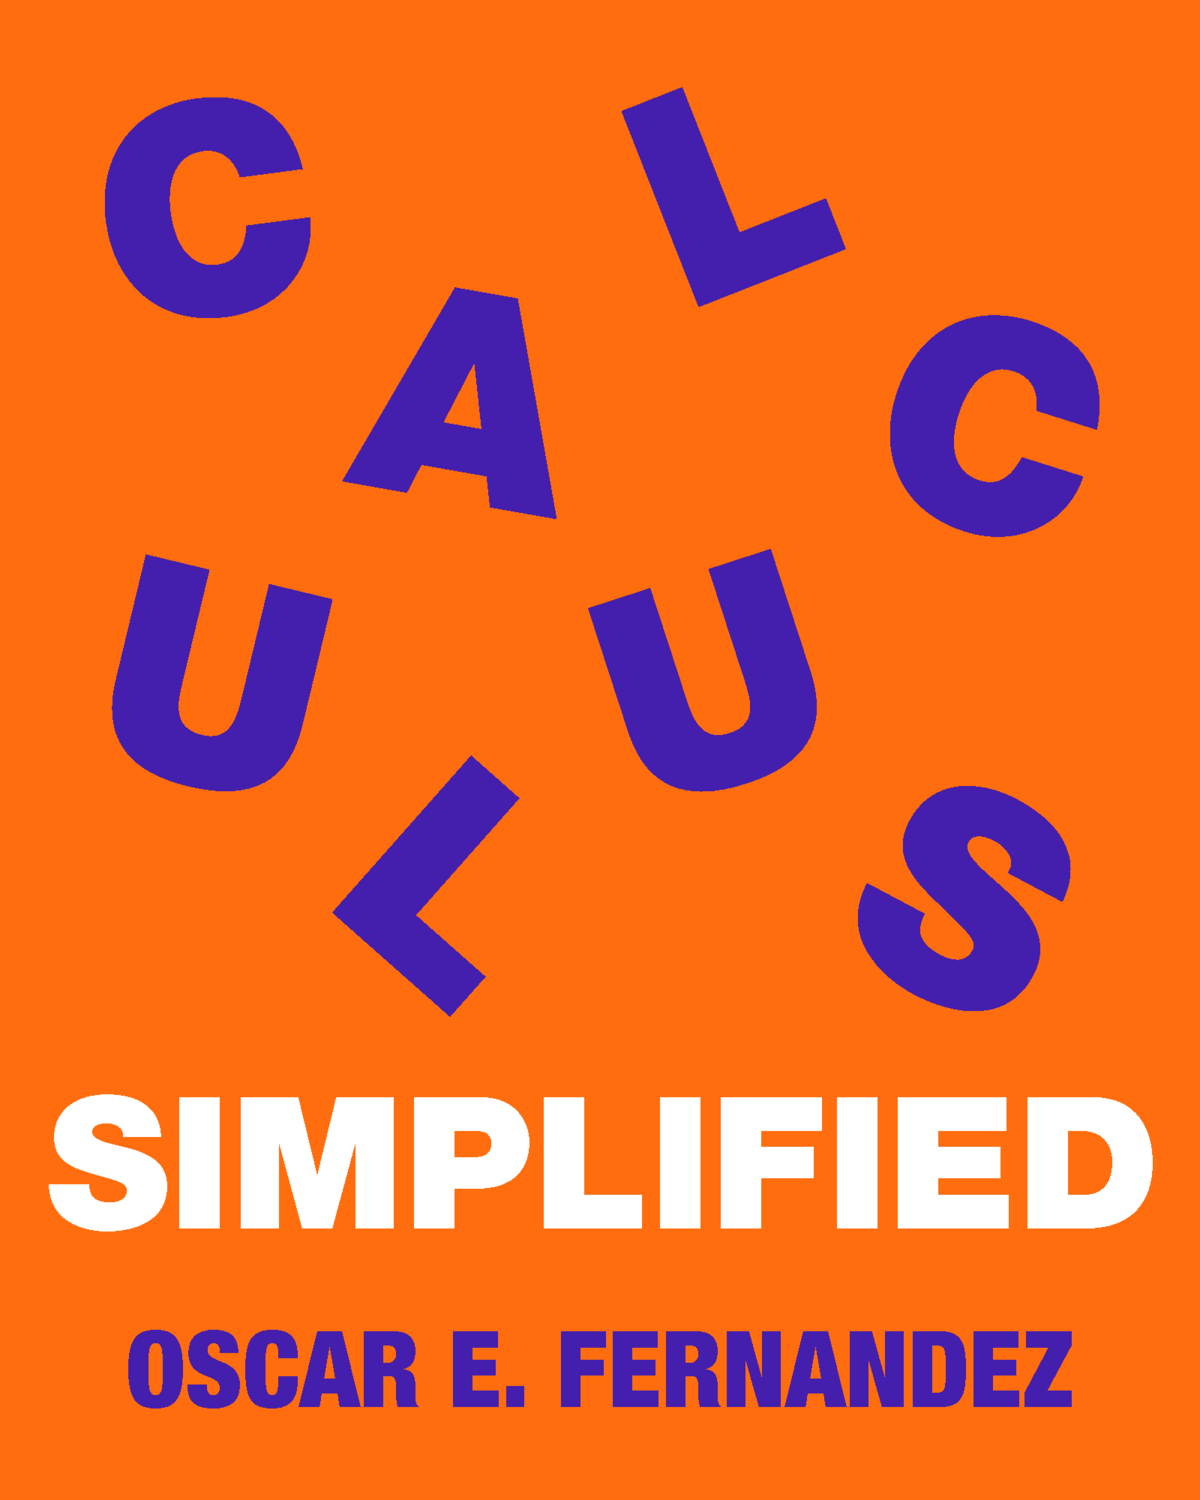 Calculus Simplified book sleeve